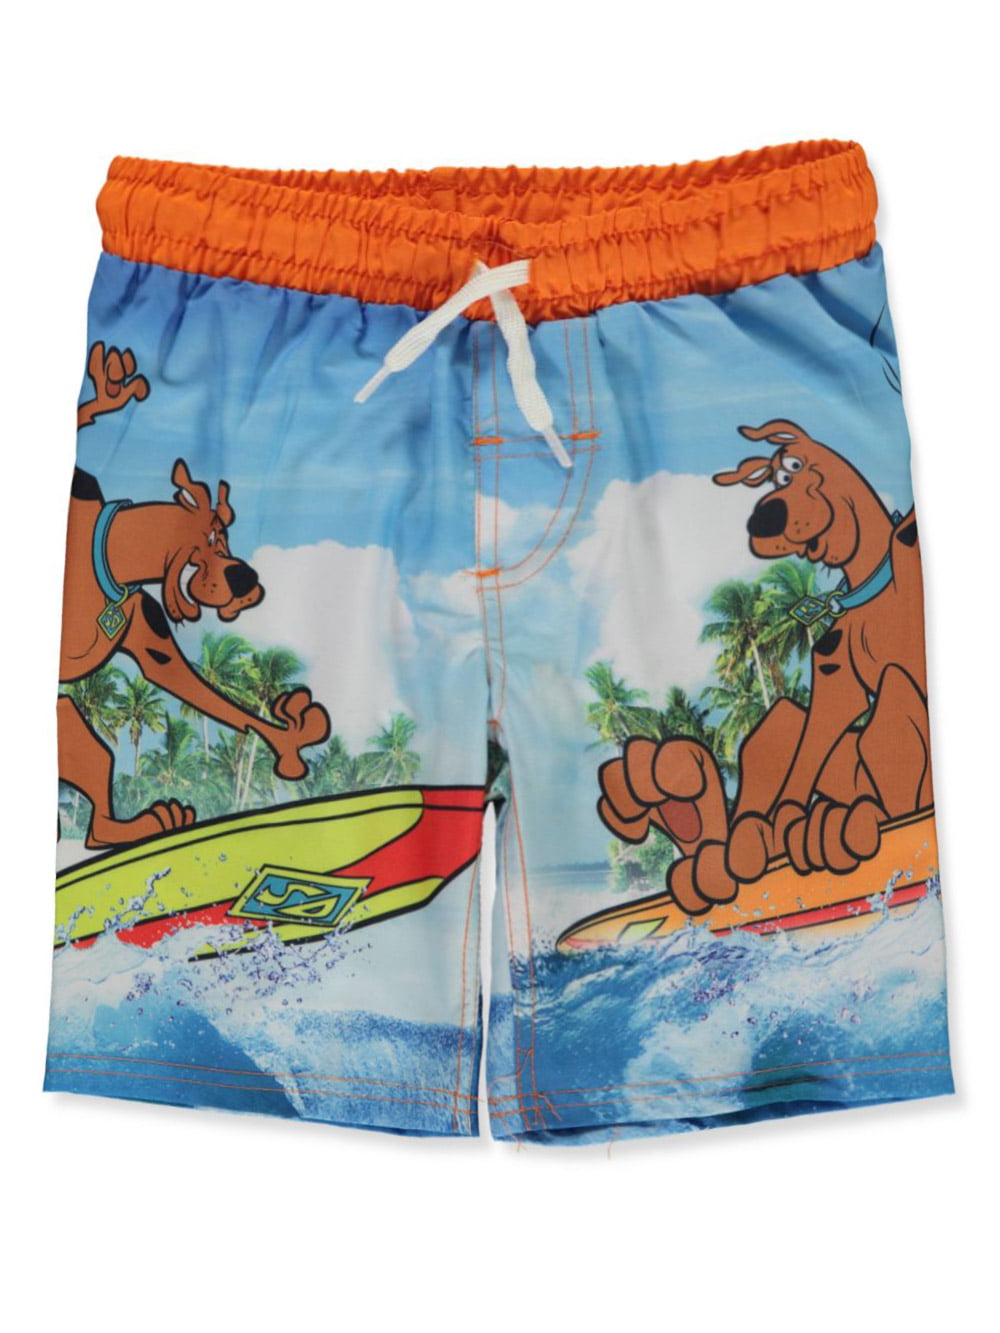 Ouxioaz Boys Swim Trunk Trippy Cat Beach Board Shorts